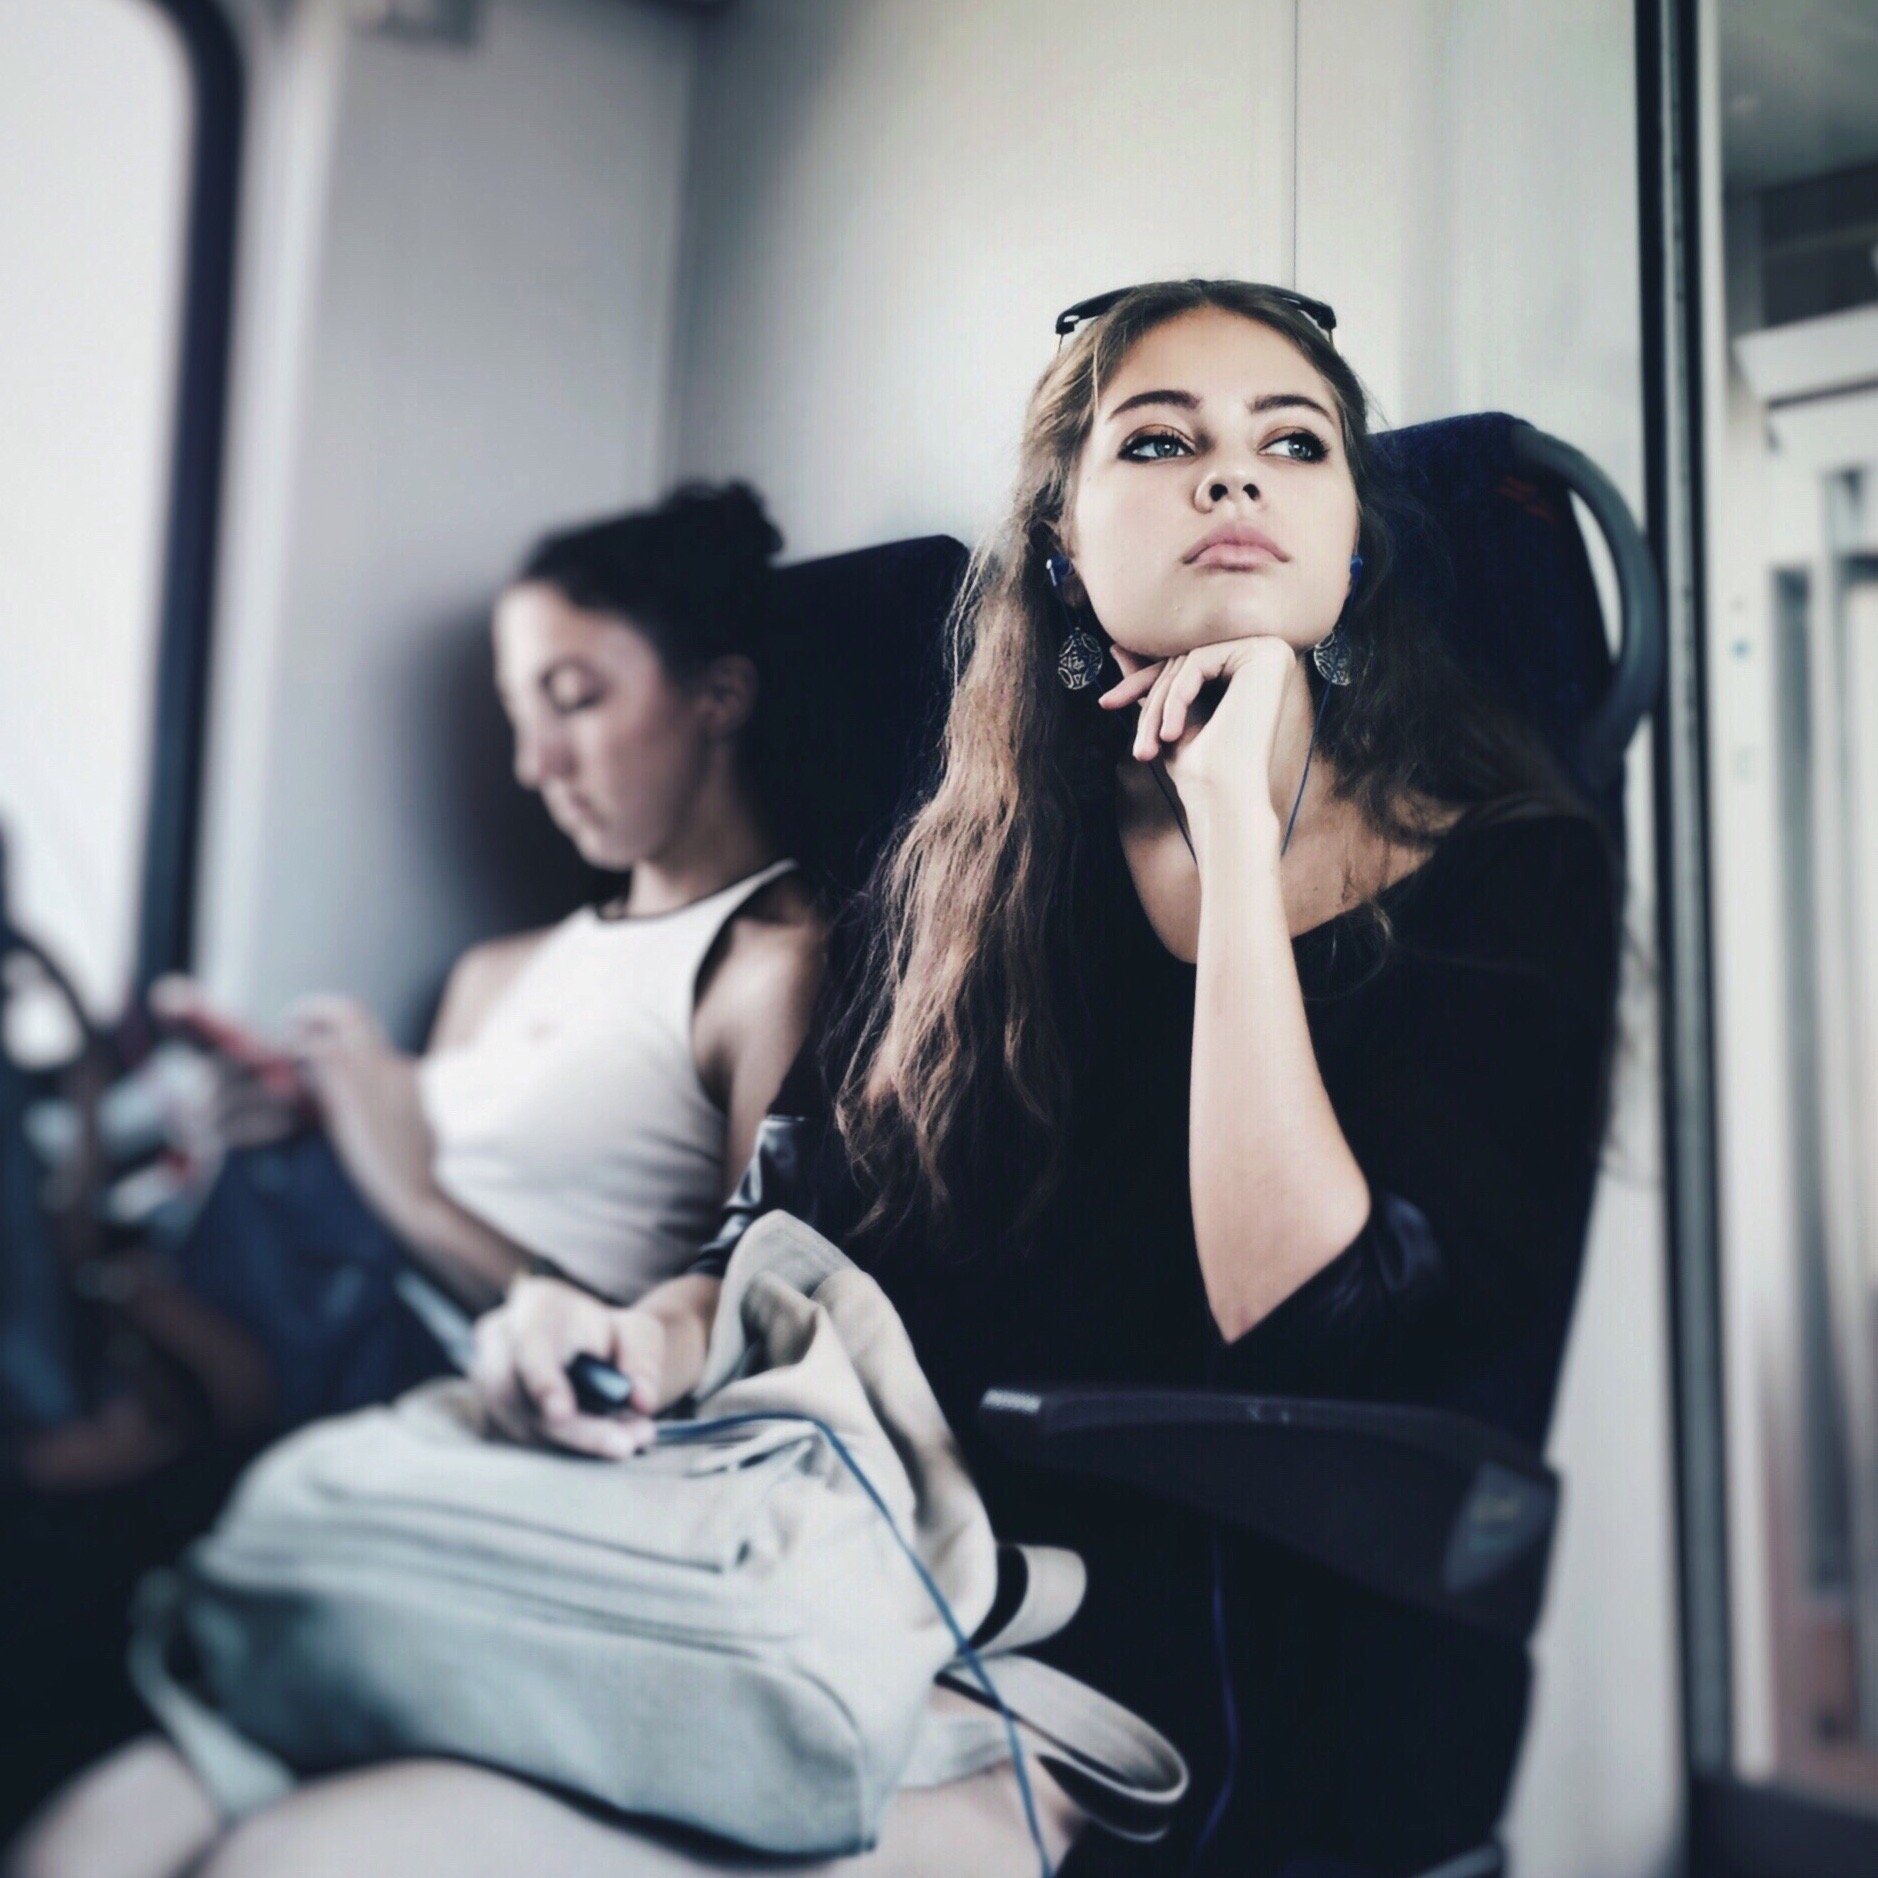 Dina Alfasi: Candid Portraits Taken on Trains